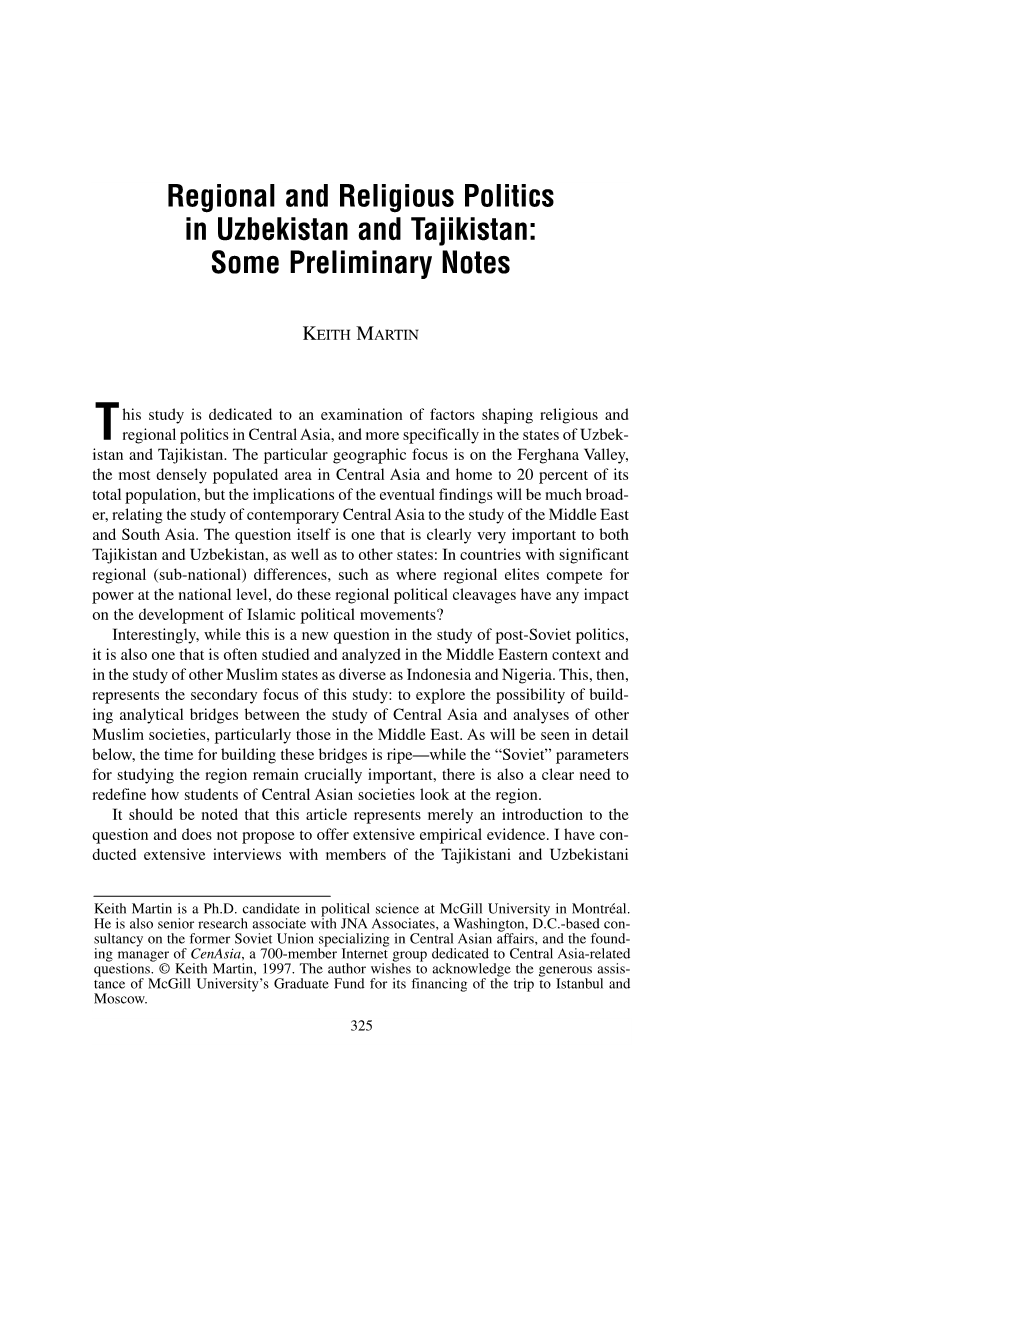 Regional and Religious Politics in Uzbekistan and Tajikistan: Some Preliminary Notes